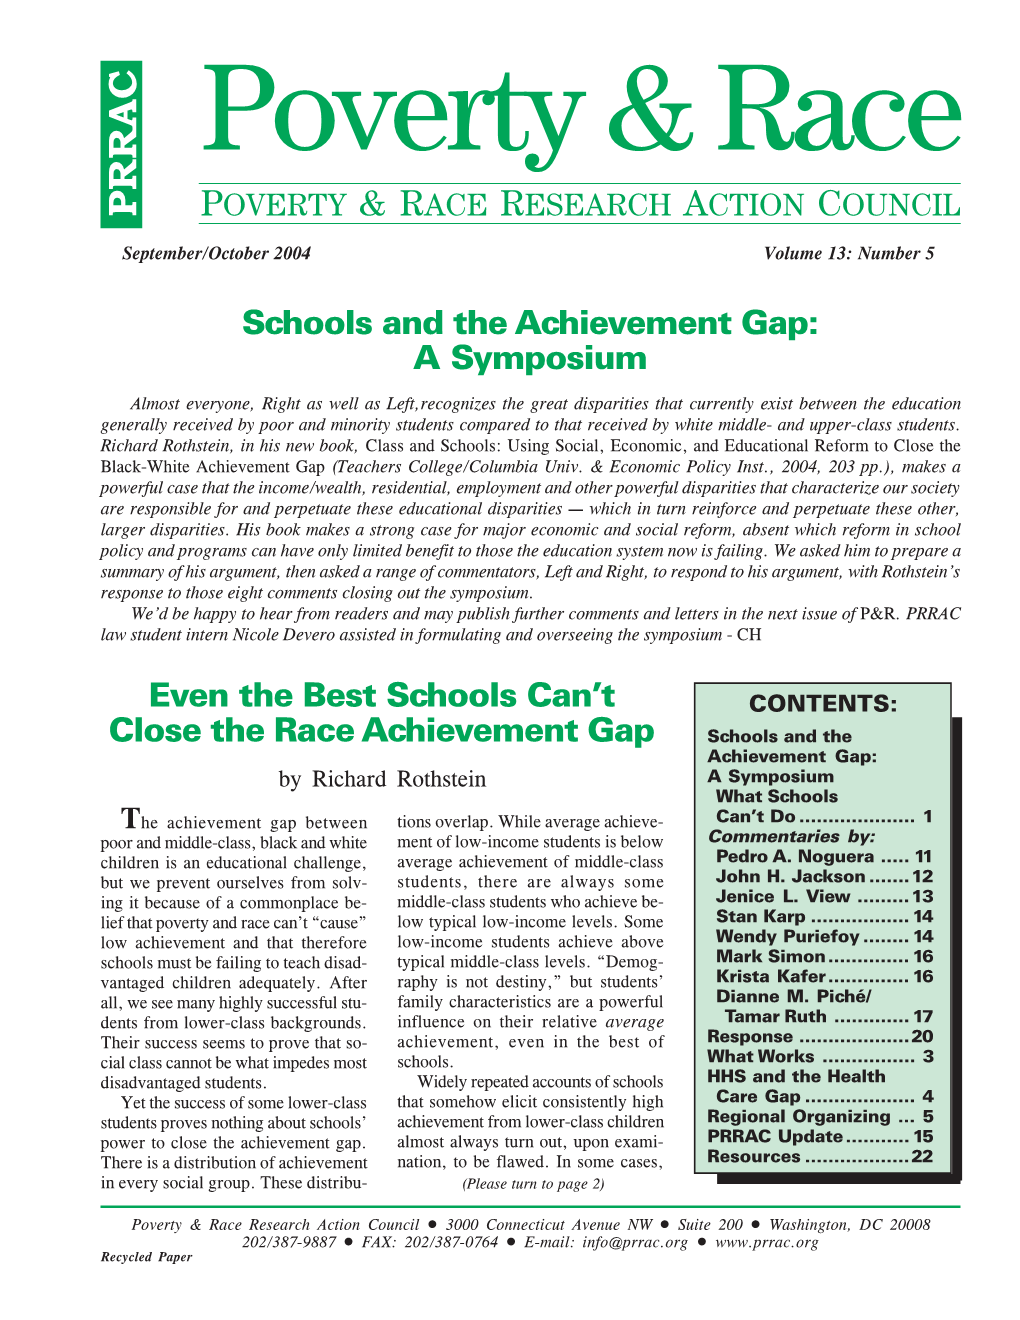 Schools and the Achievement Gap: a Symposium